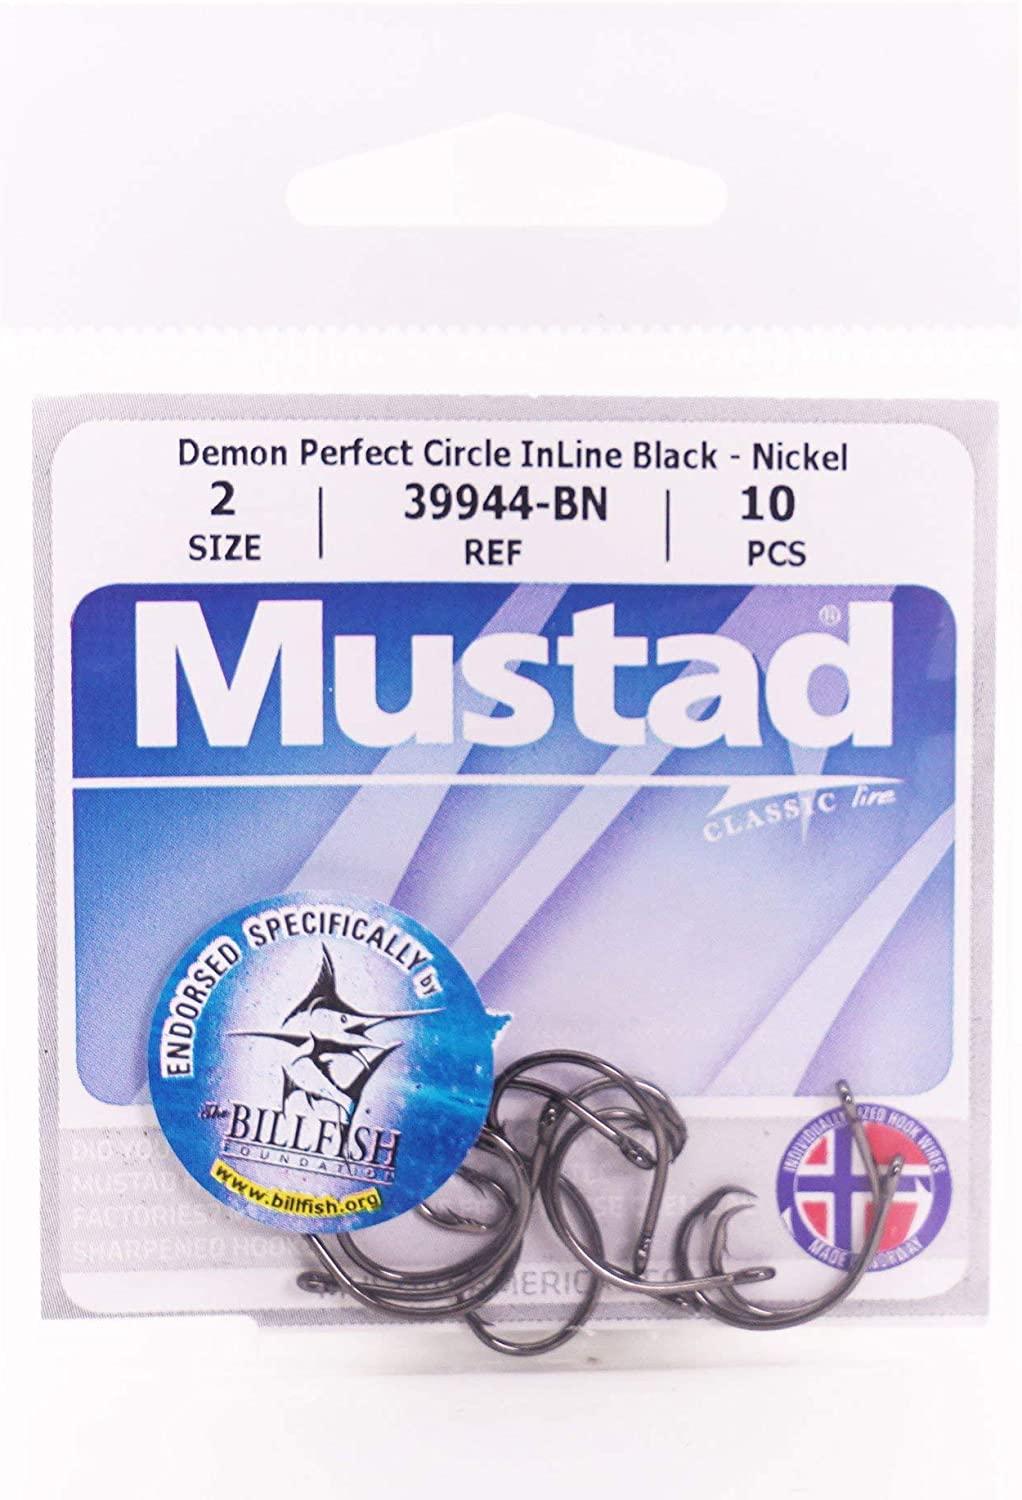 Mustad Classic 39944 Standard Wire Demon Perfect In Line Wide Gap